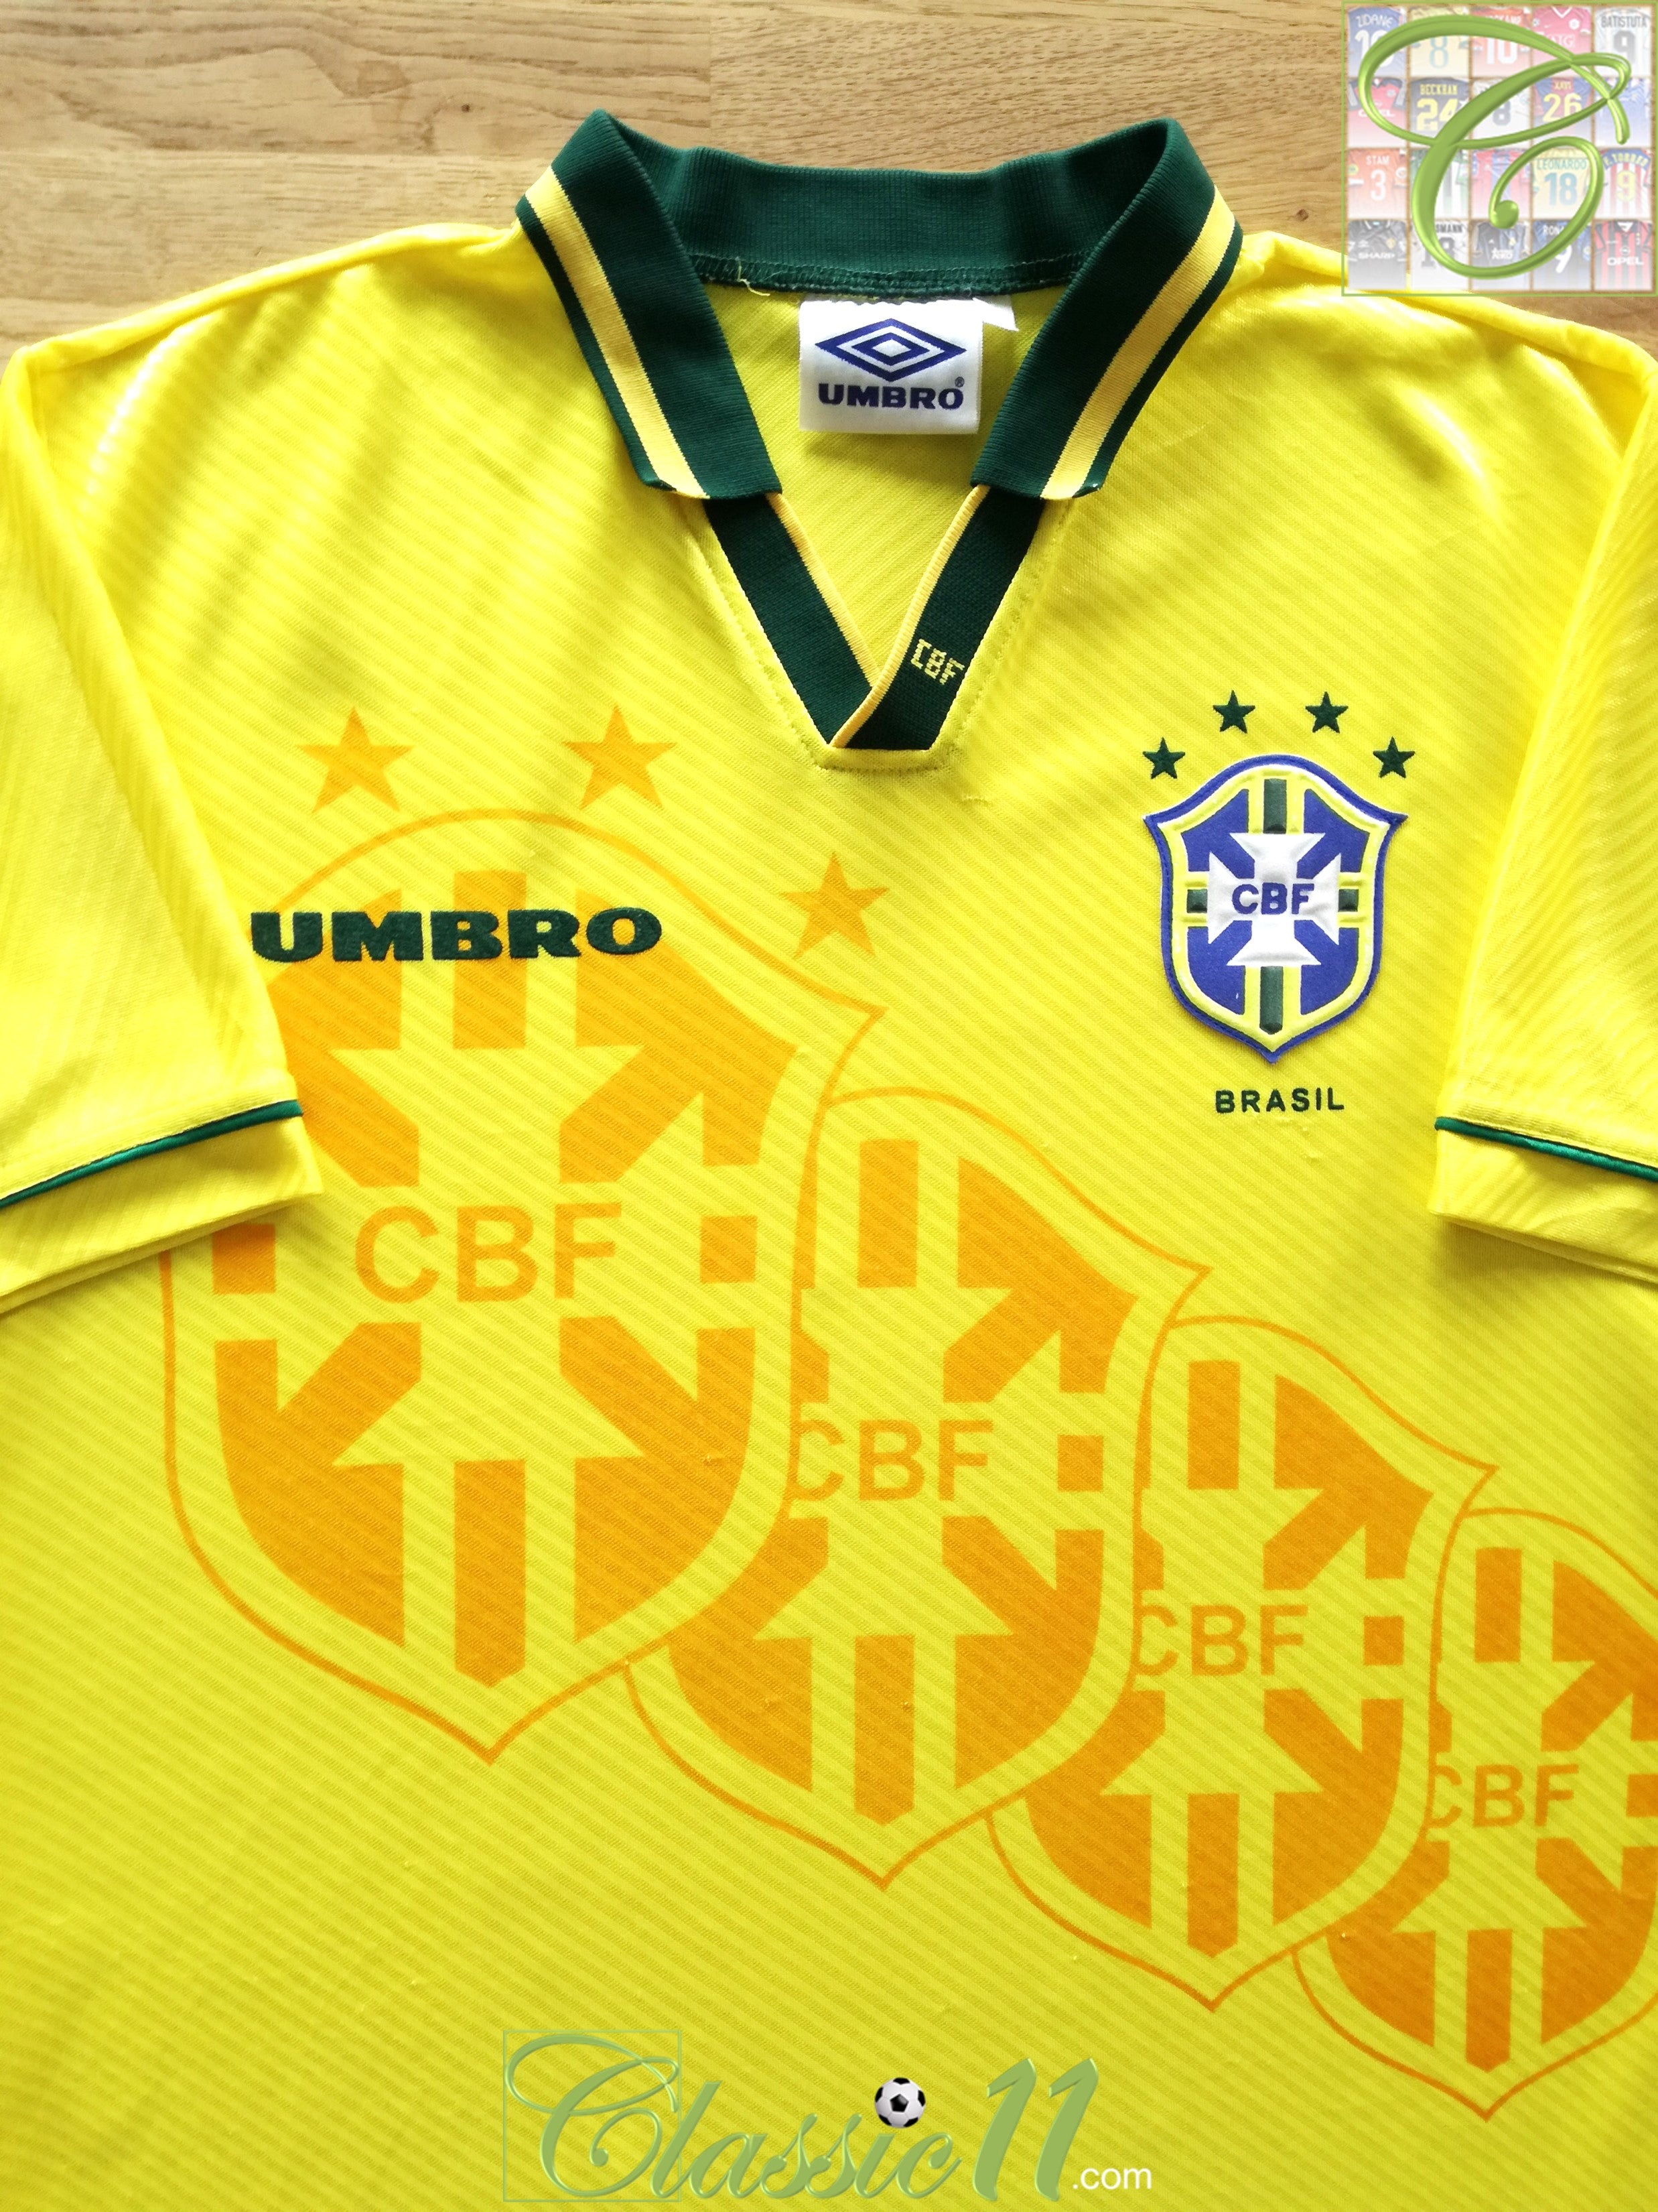 1994/95 Brazil Home Football Shirt / Old Vintage Umbro Soccer